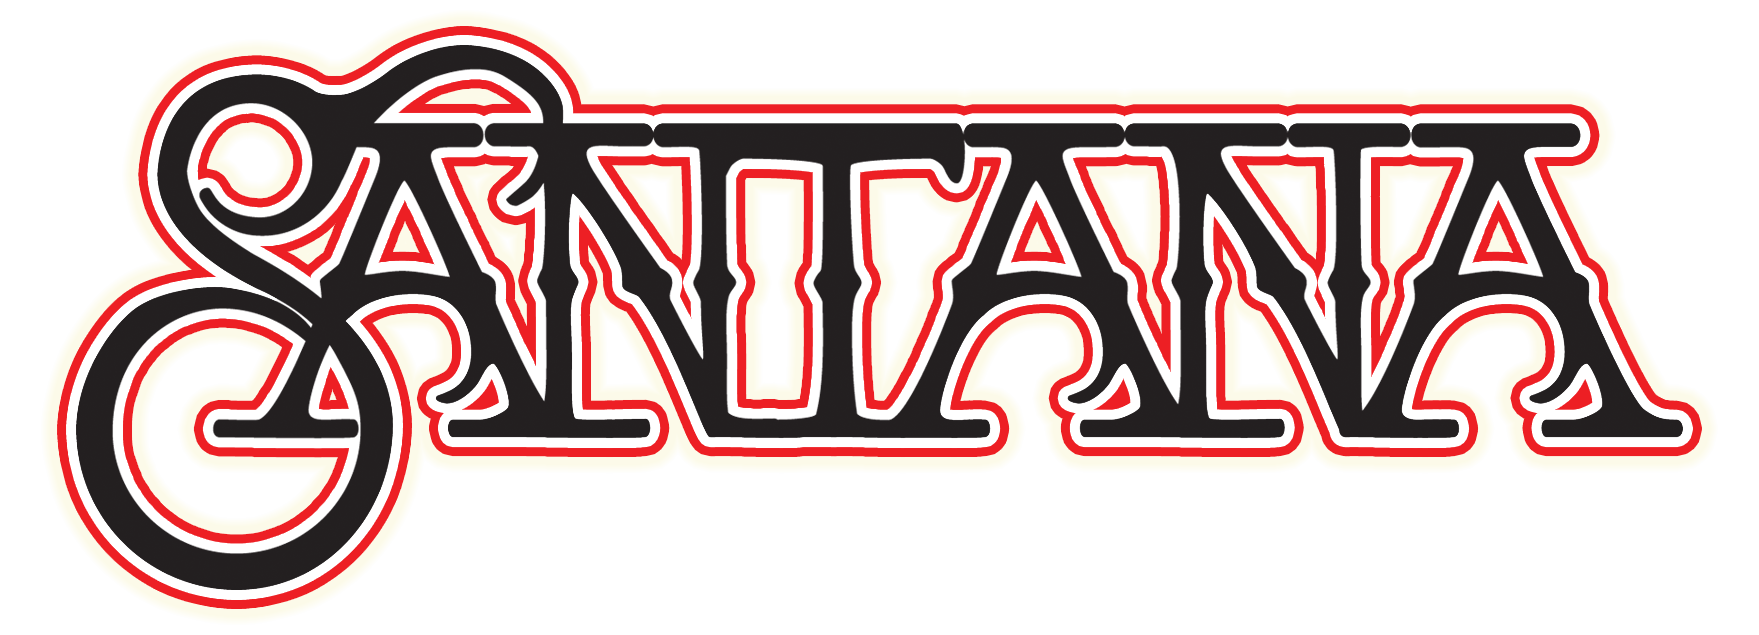 Santana Logo - Carlos Santana logo fonts | Typophile